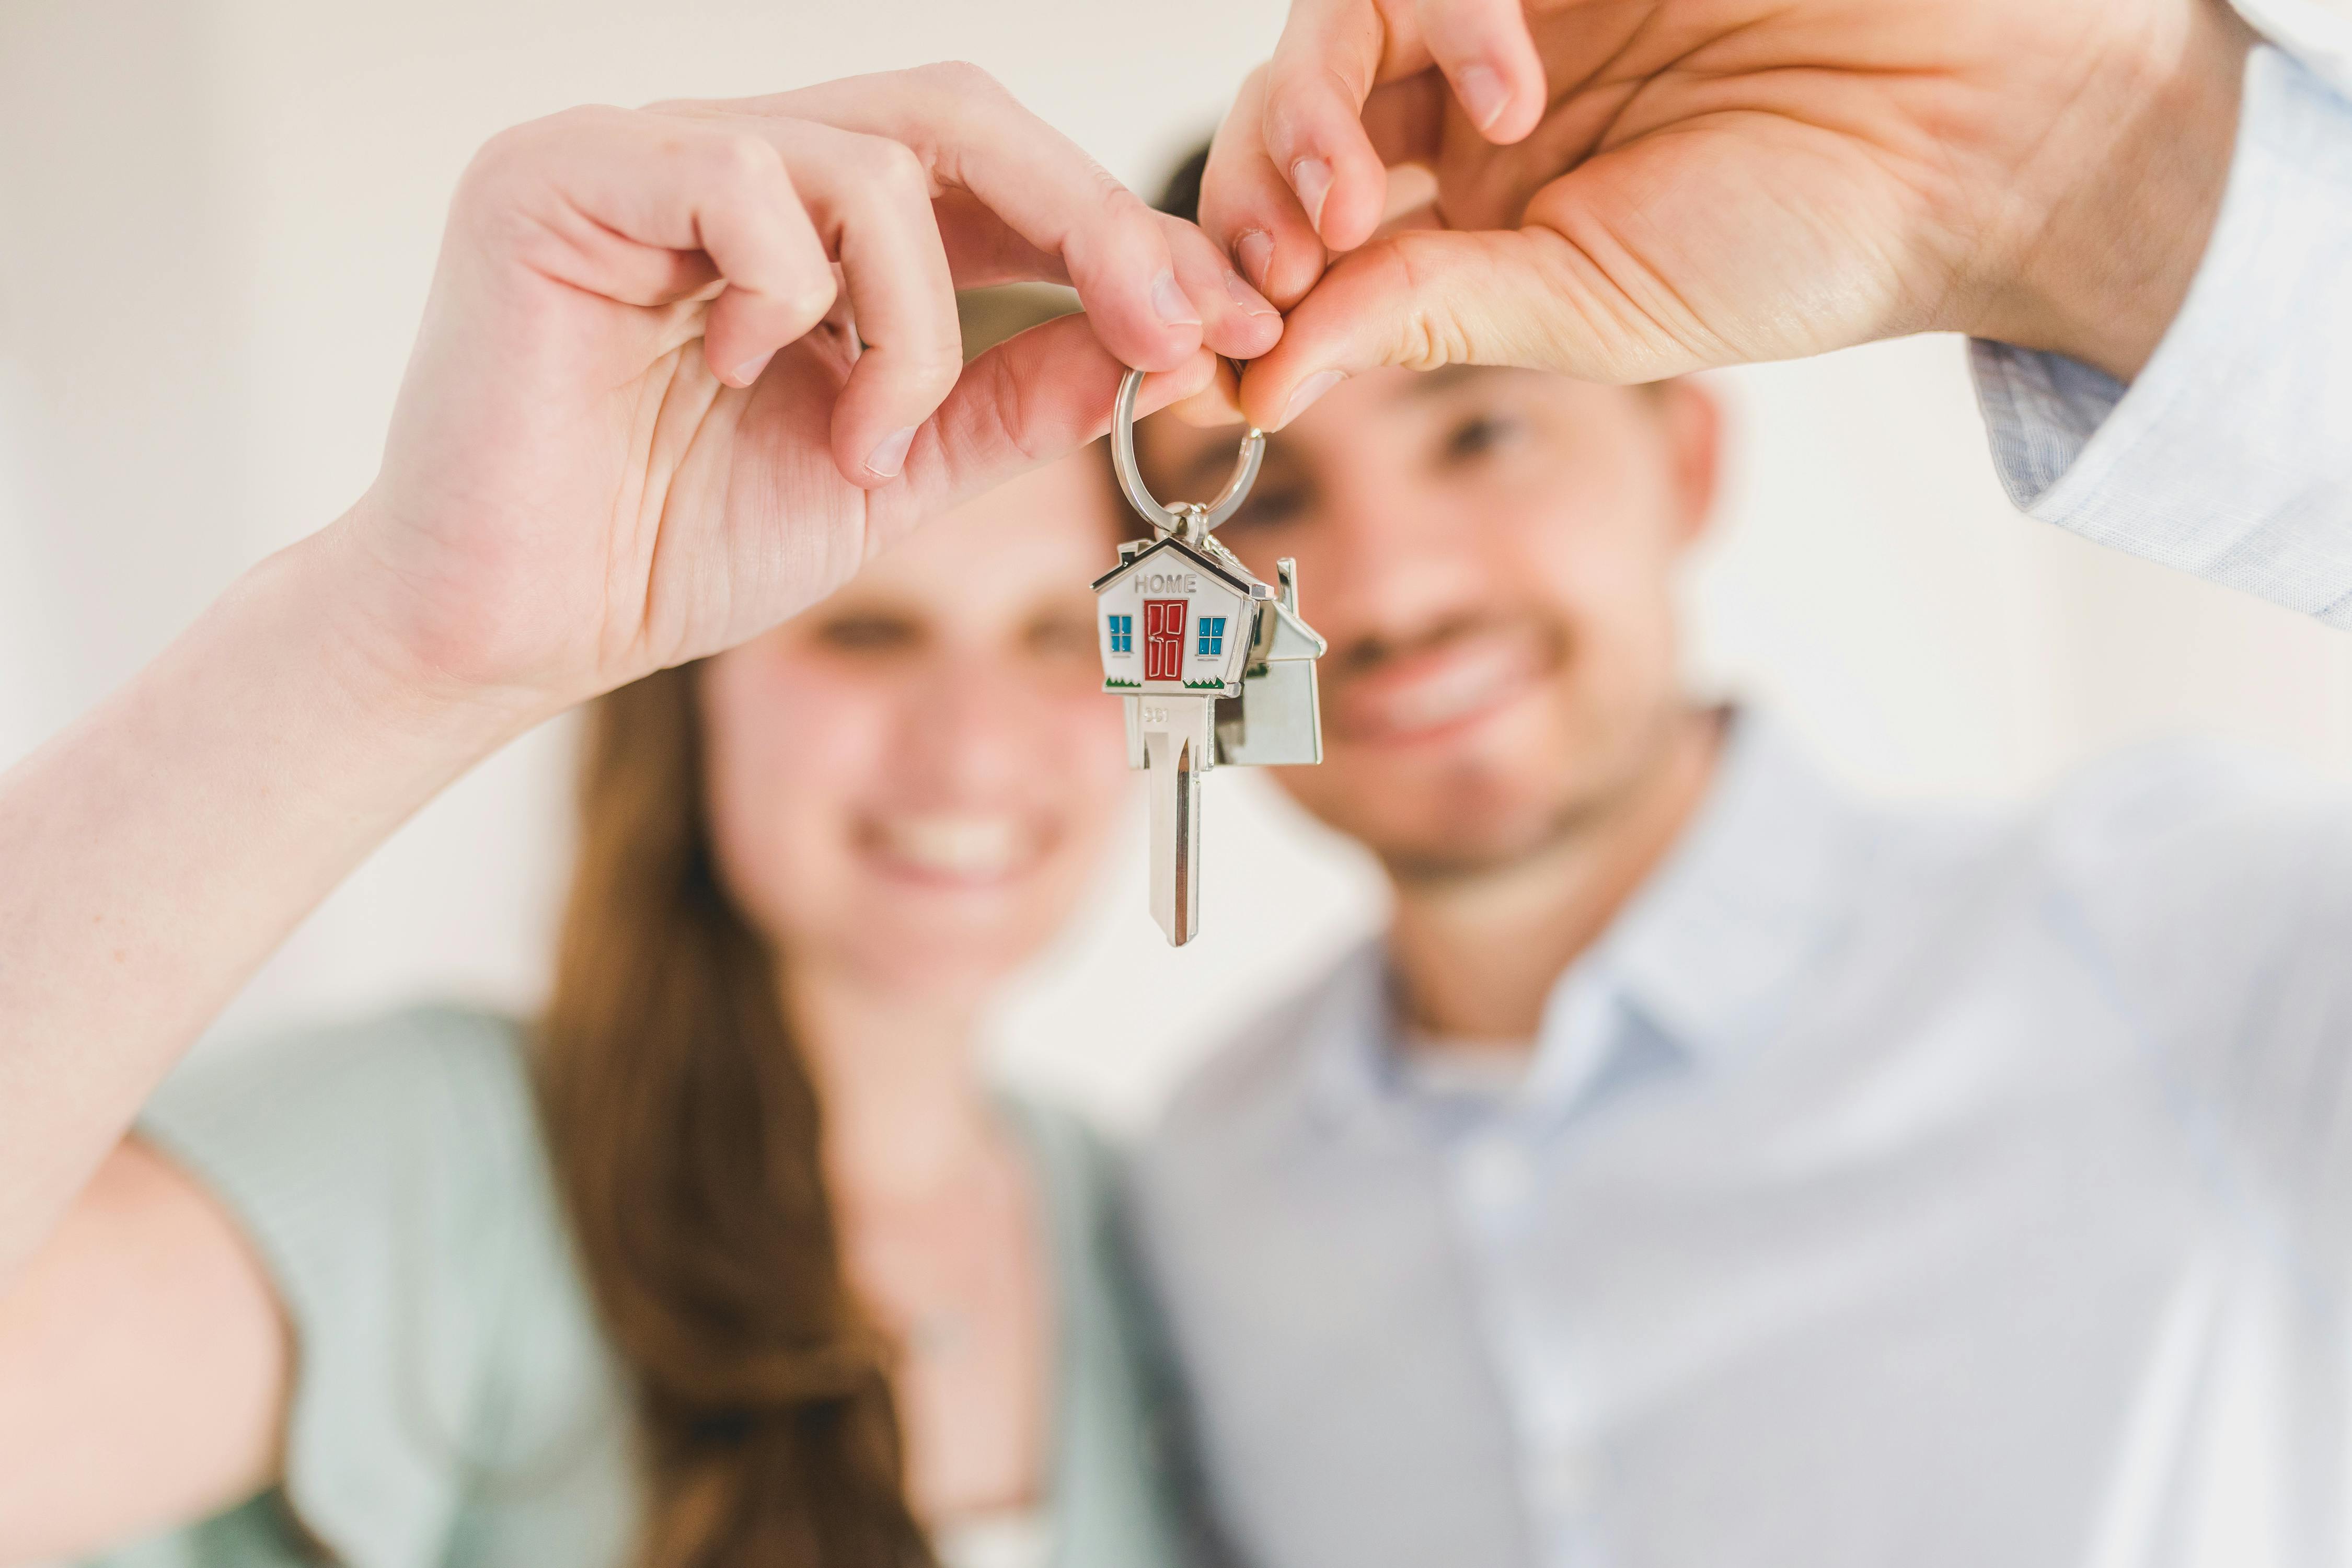 A couple holding home keys | Source: Pexels